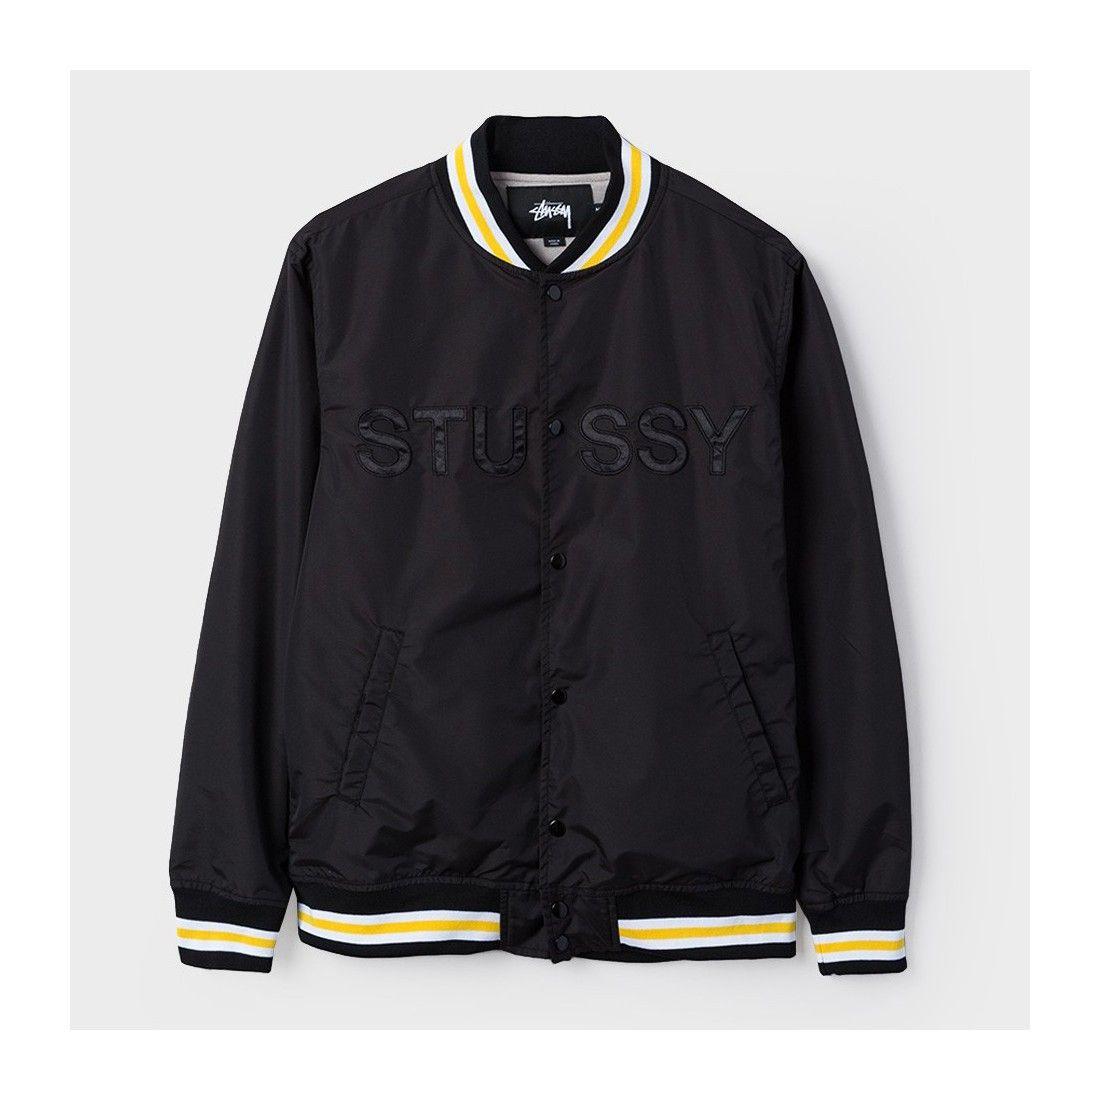 Stussy Clothing Logo - Men's jackets Stüssy Logo Stadium Jacket Black Shop online